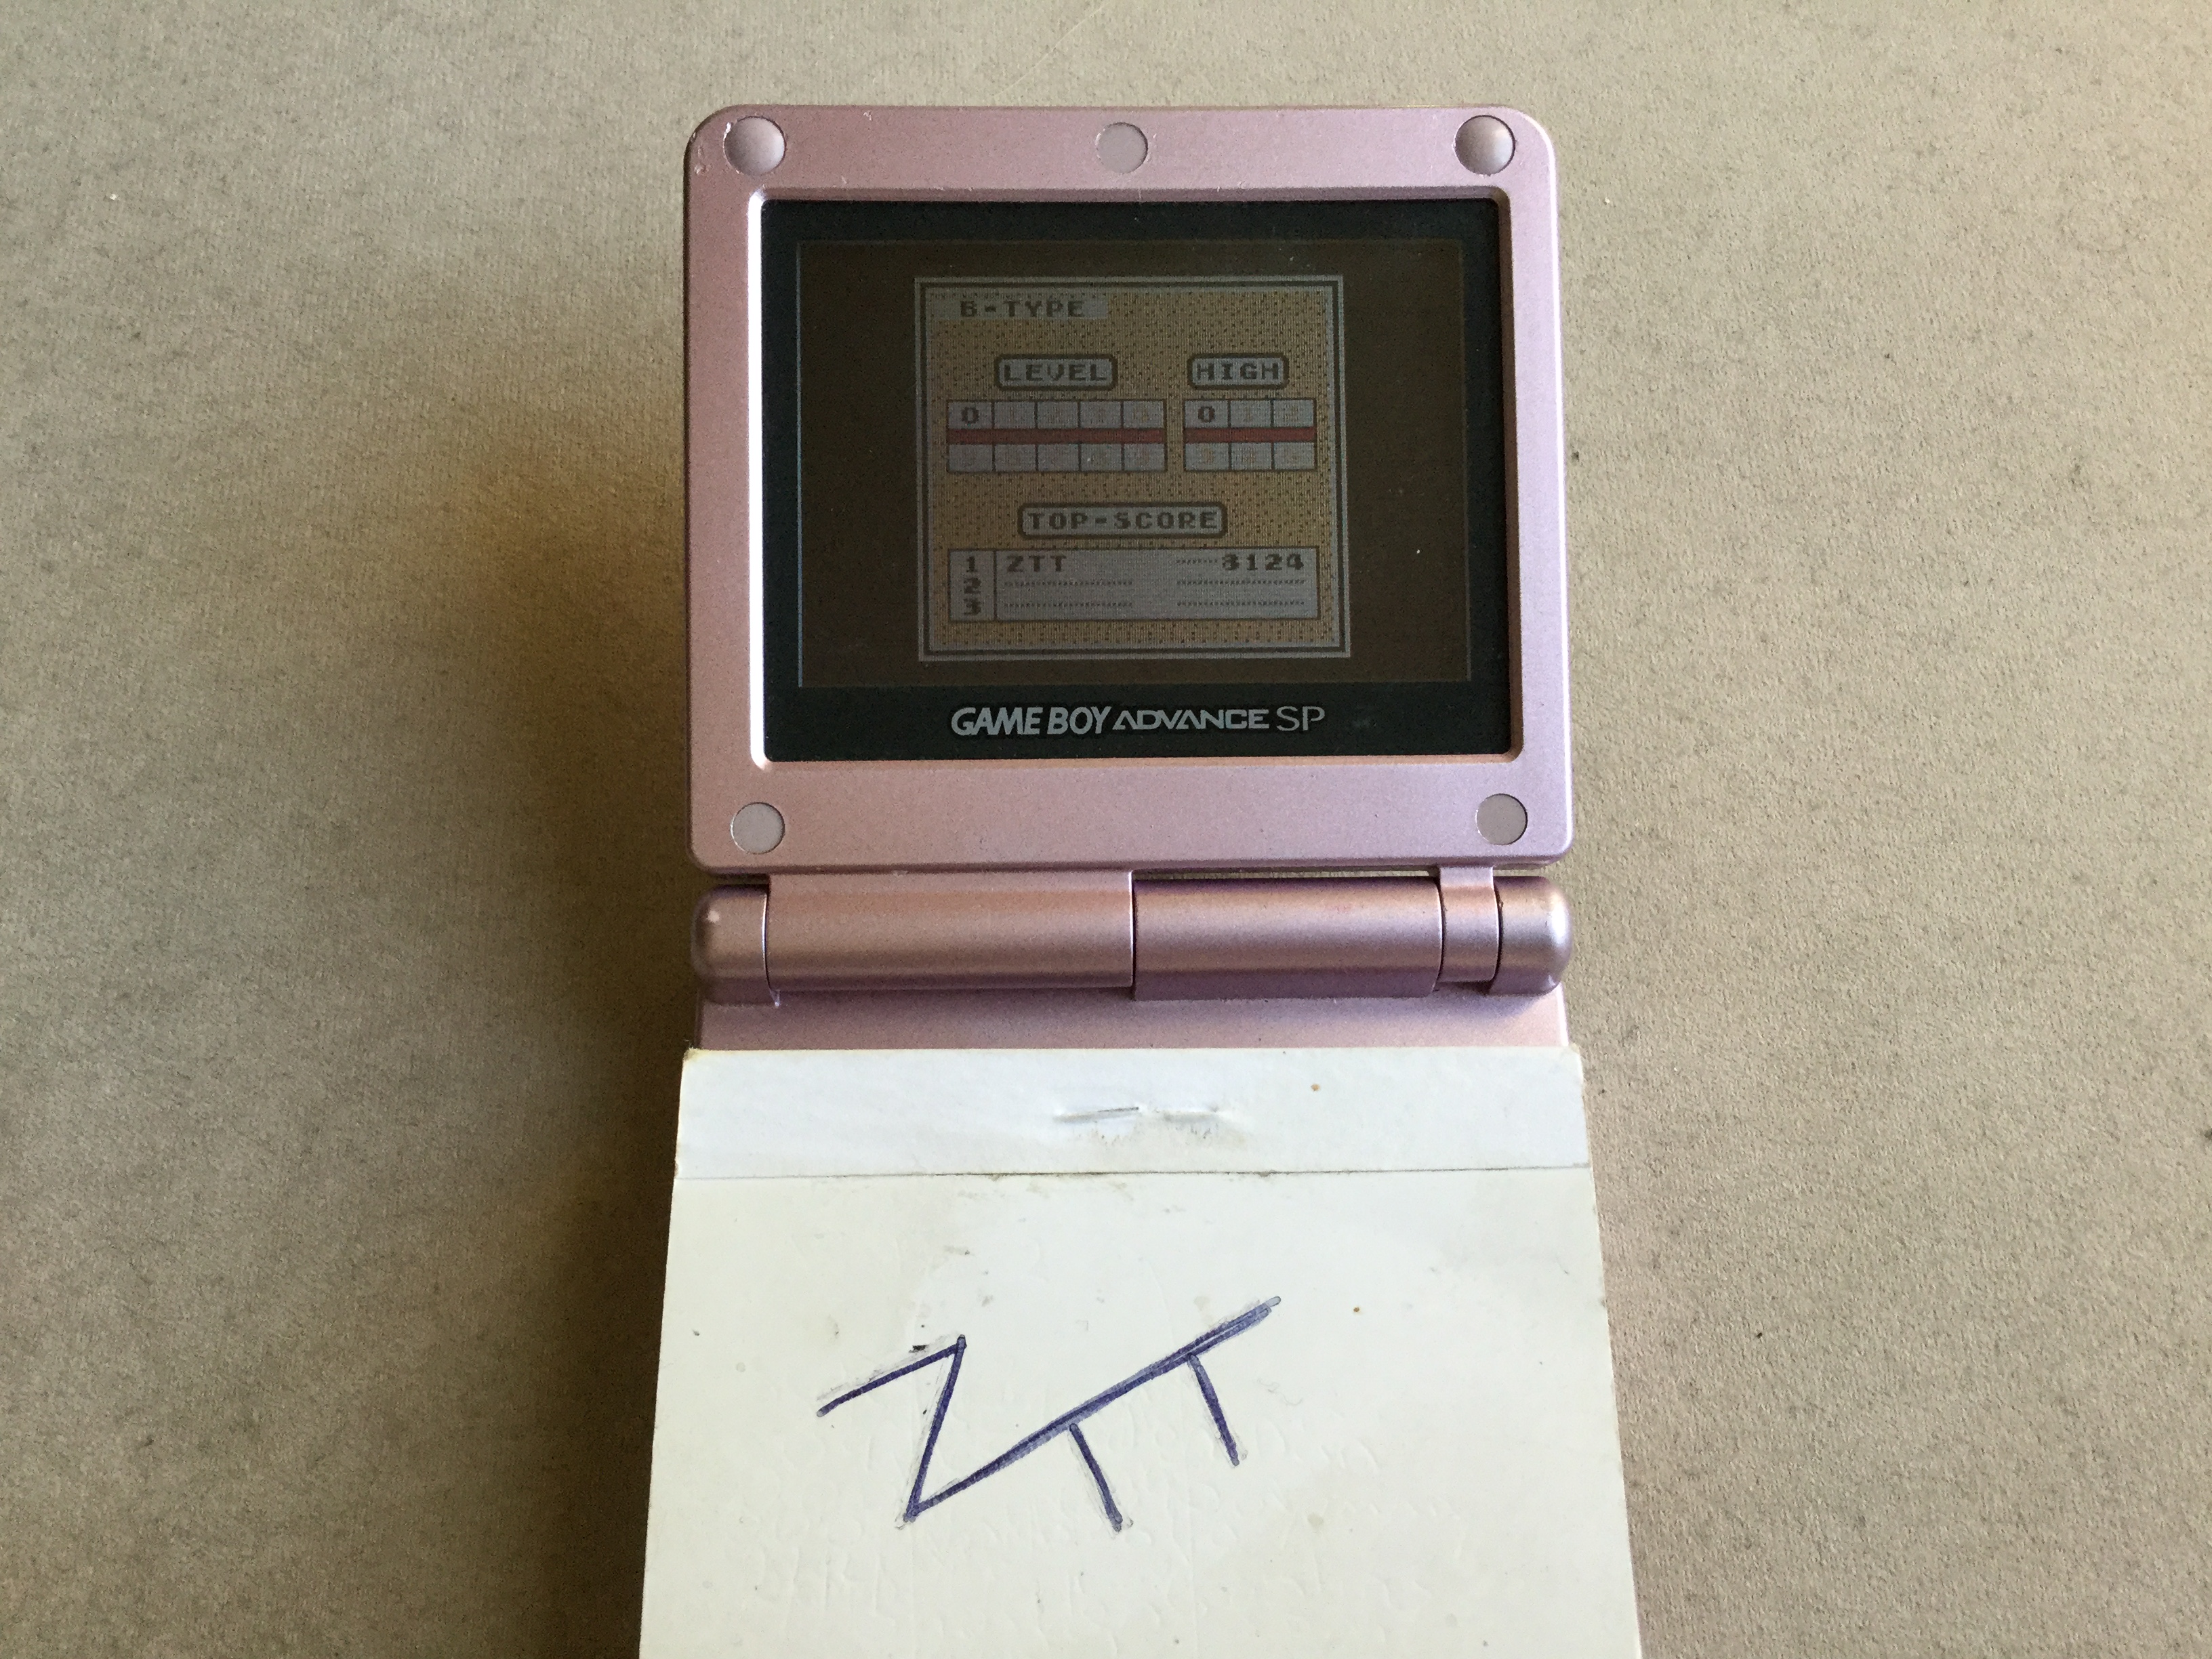 Frankie: Tetris: Type B [Level 0 / High 0] (Game Boy) 8,124 points on 2019-12-31 01:58:05